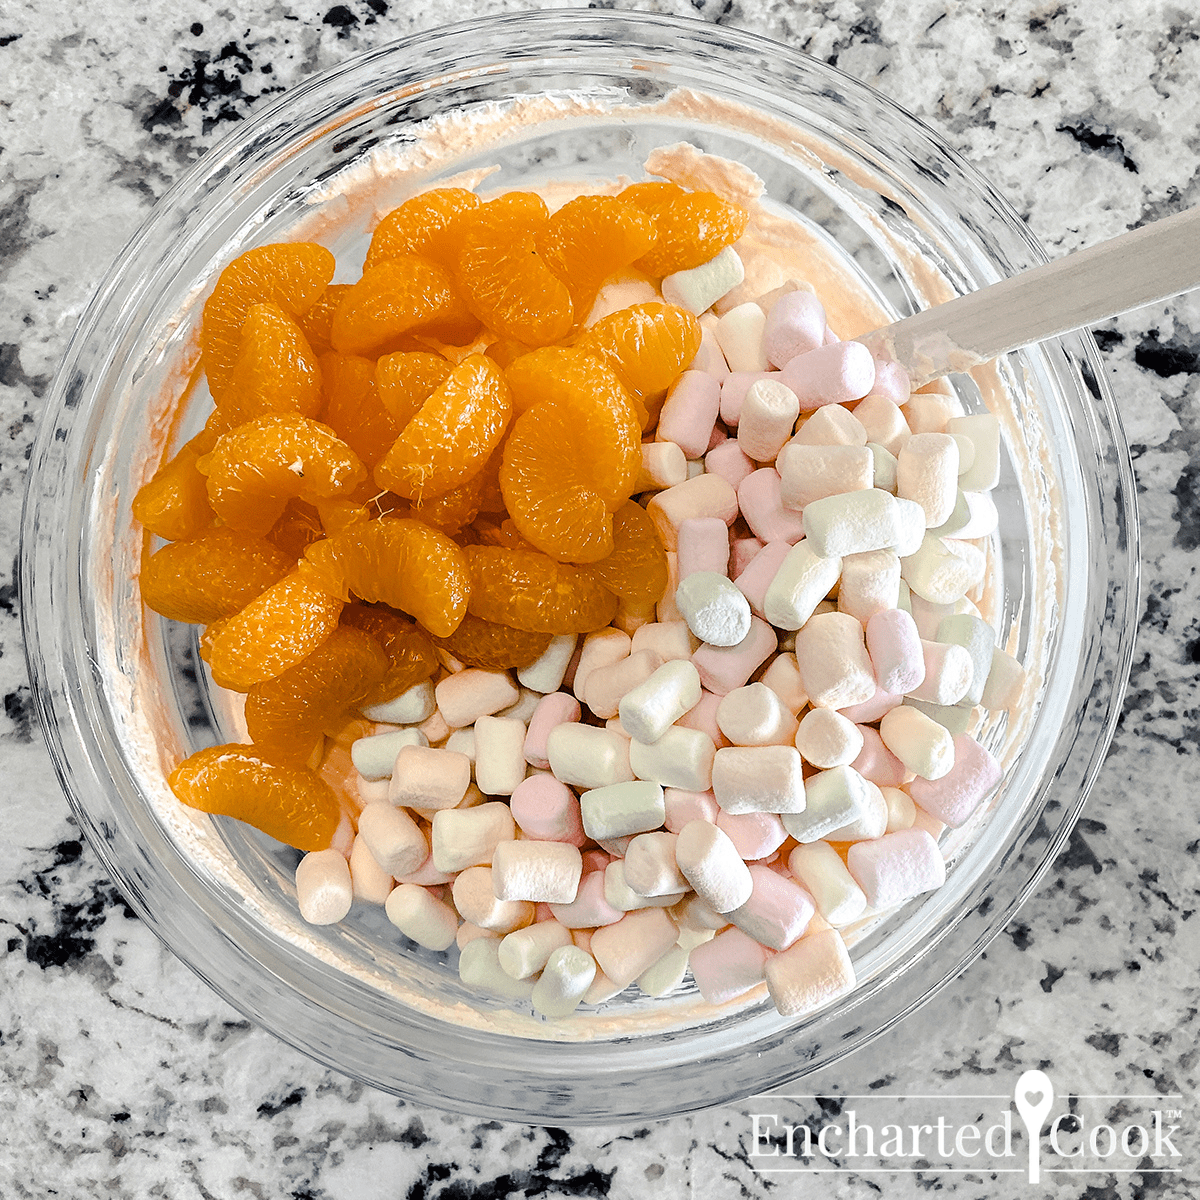 Mandarin oranges and pastel mini marshmallows are added to the yogurt mixture.